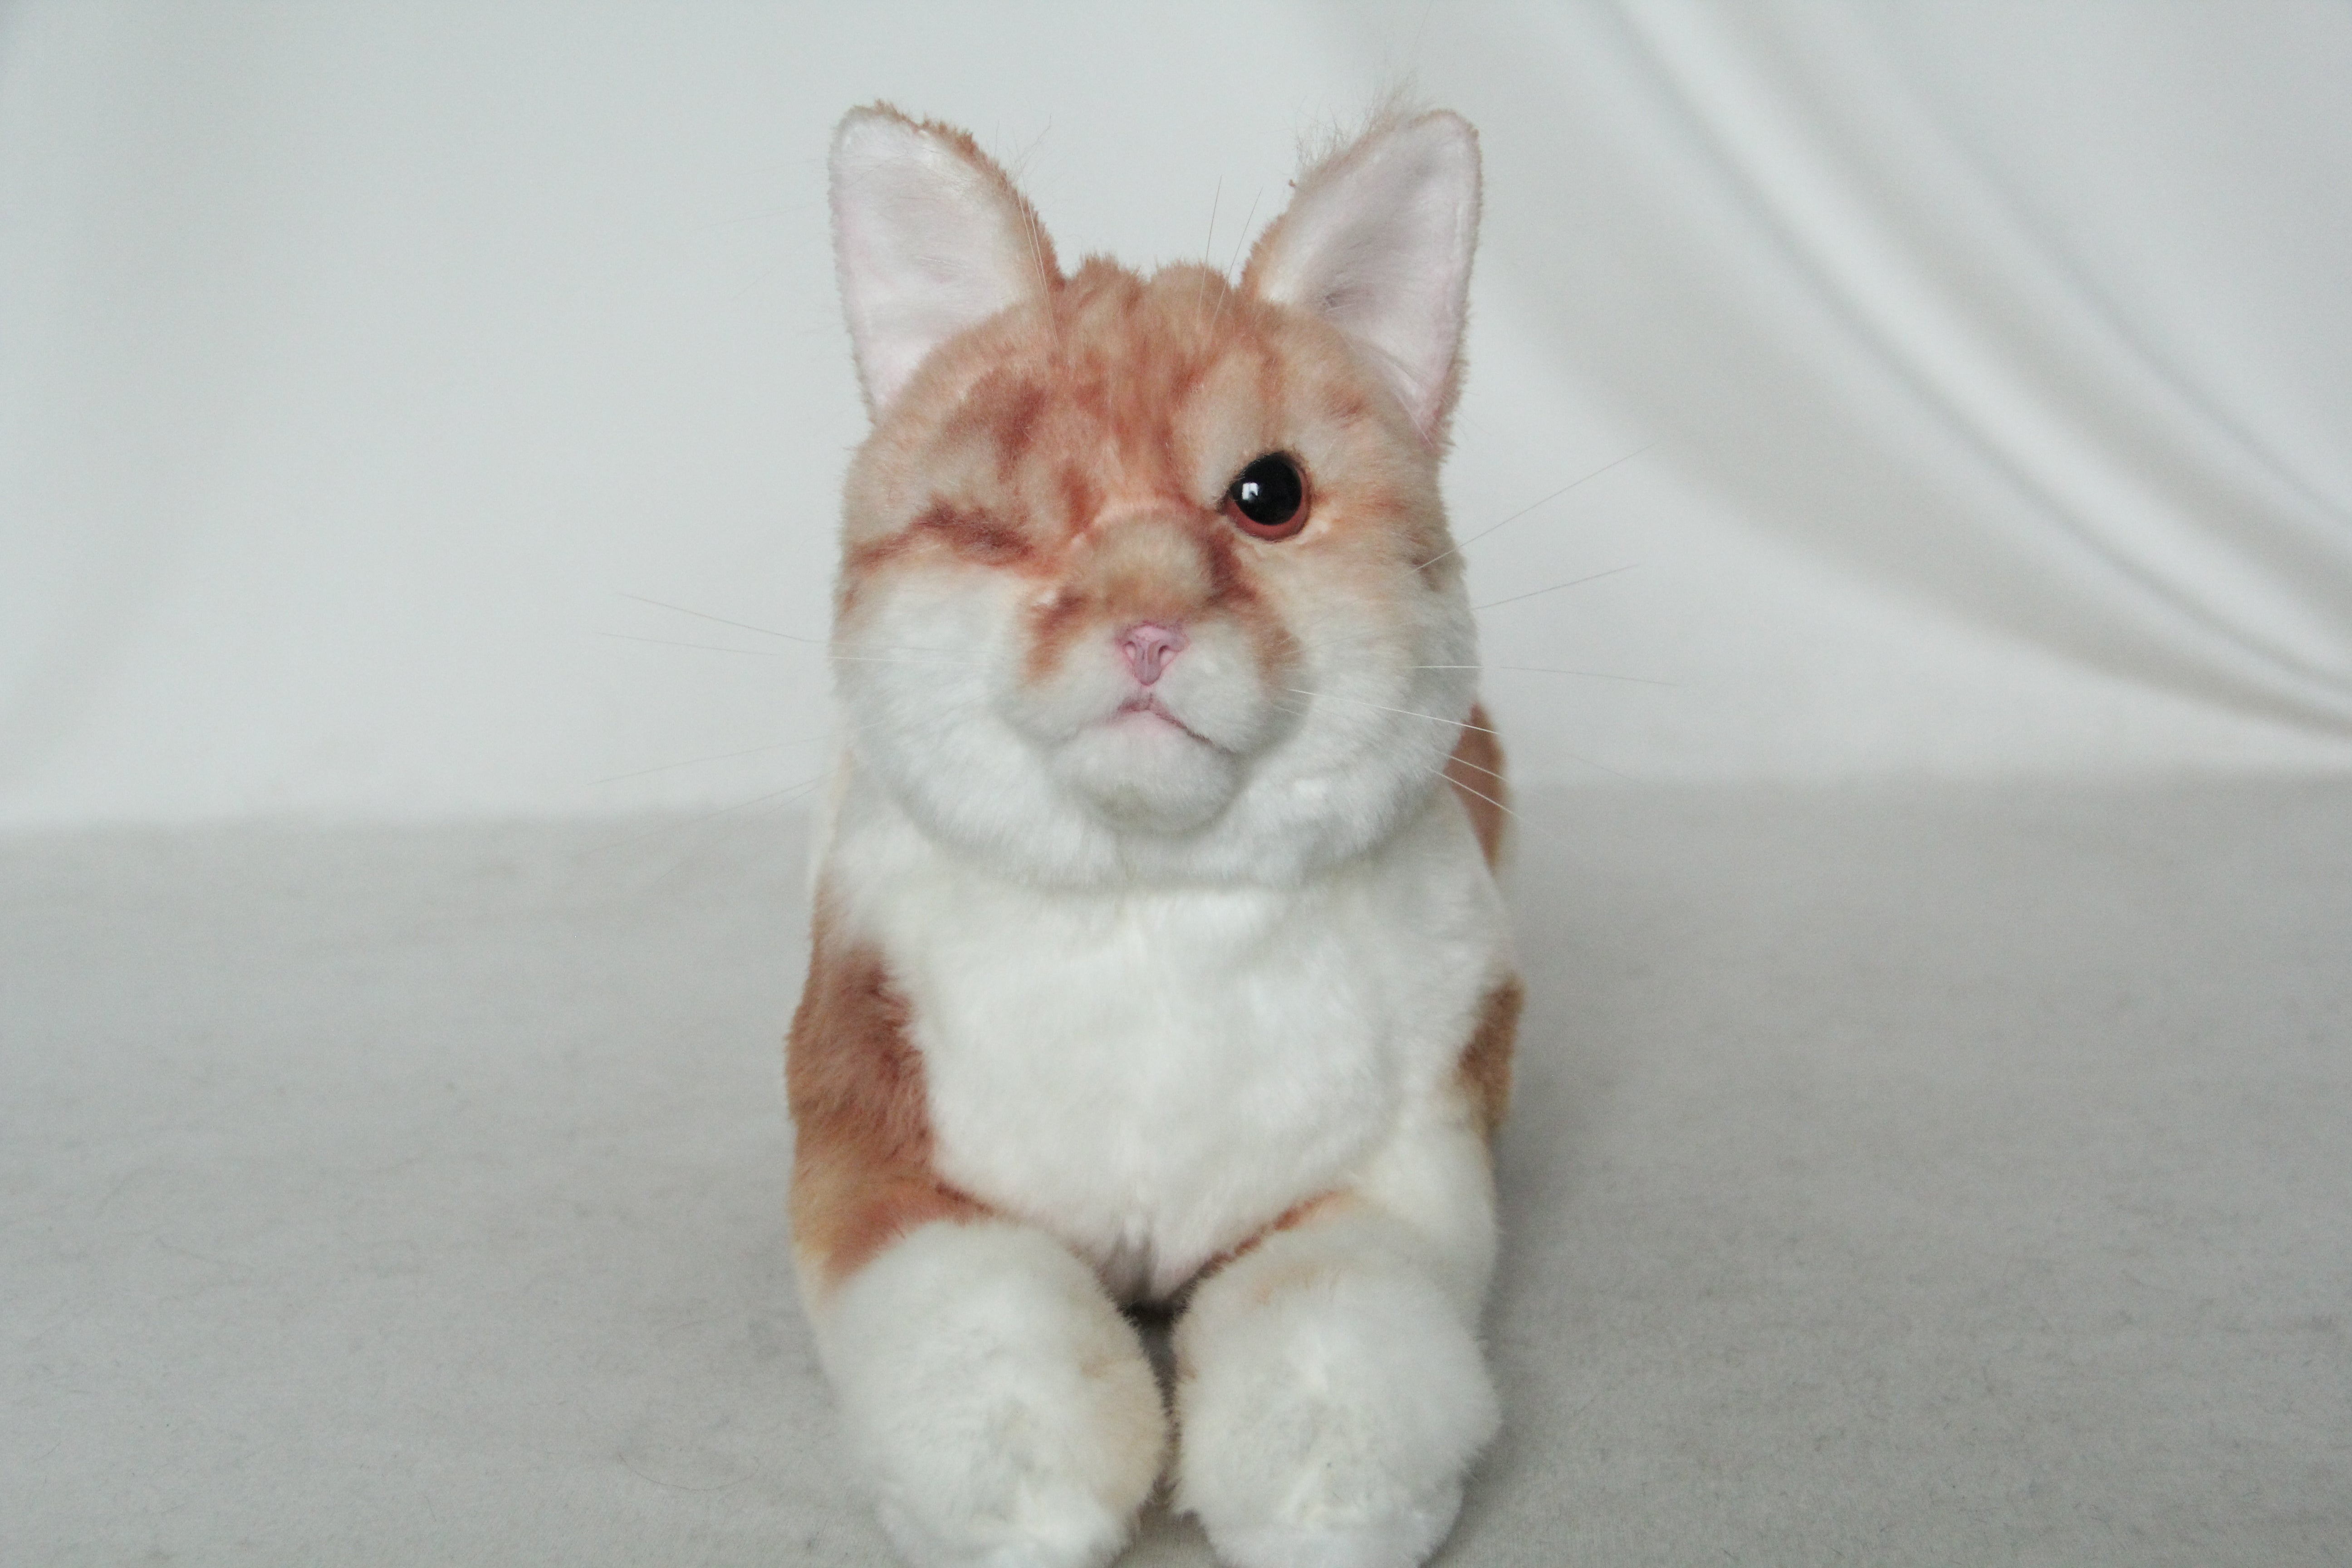 NO.33 Special orange cat - Chongker